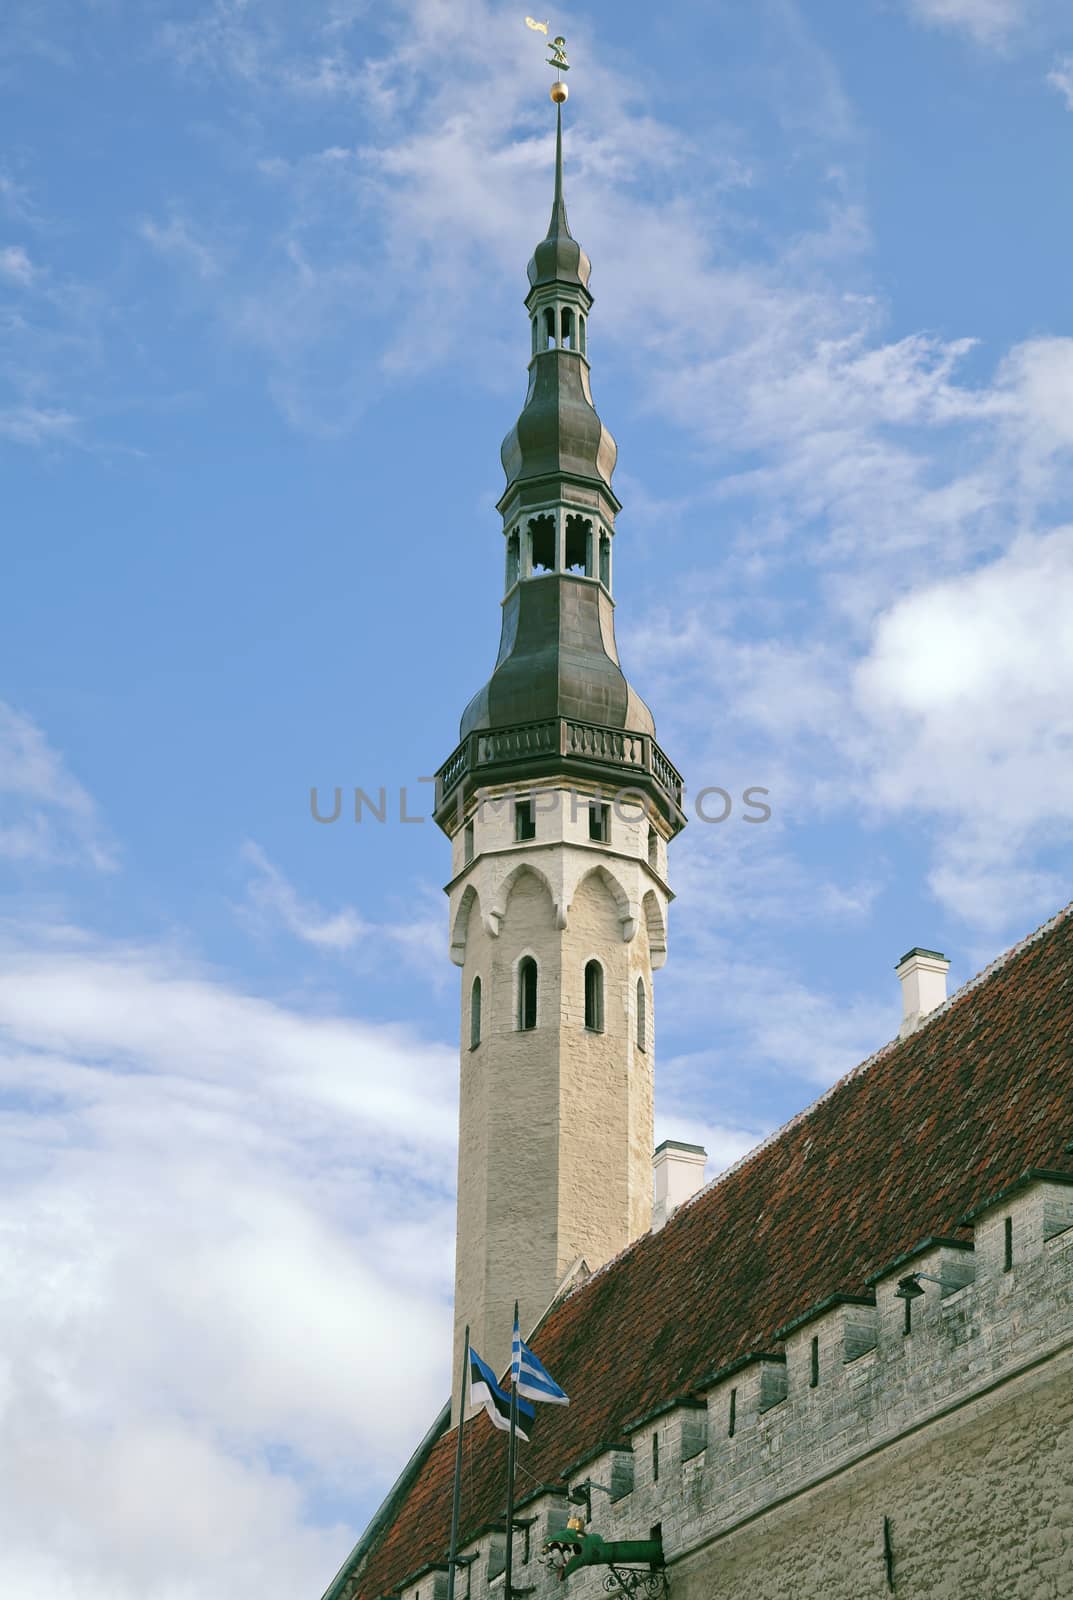 Tower of Tallinn town hall in Estonia